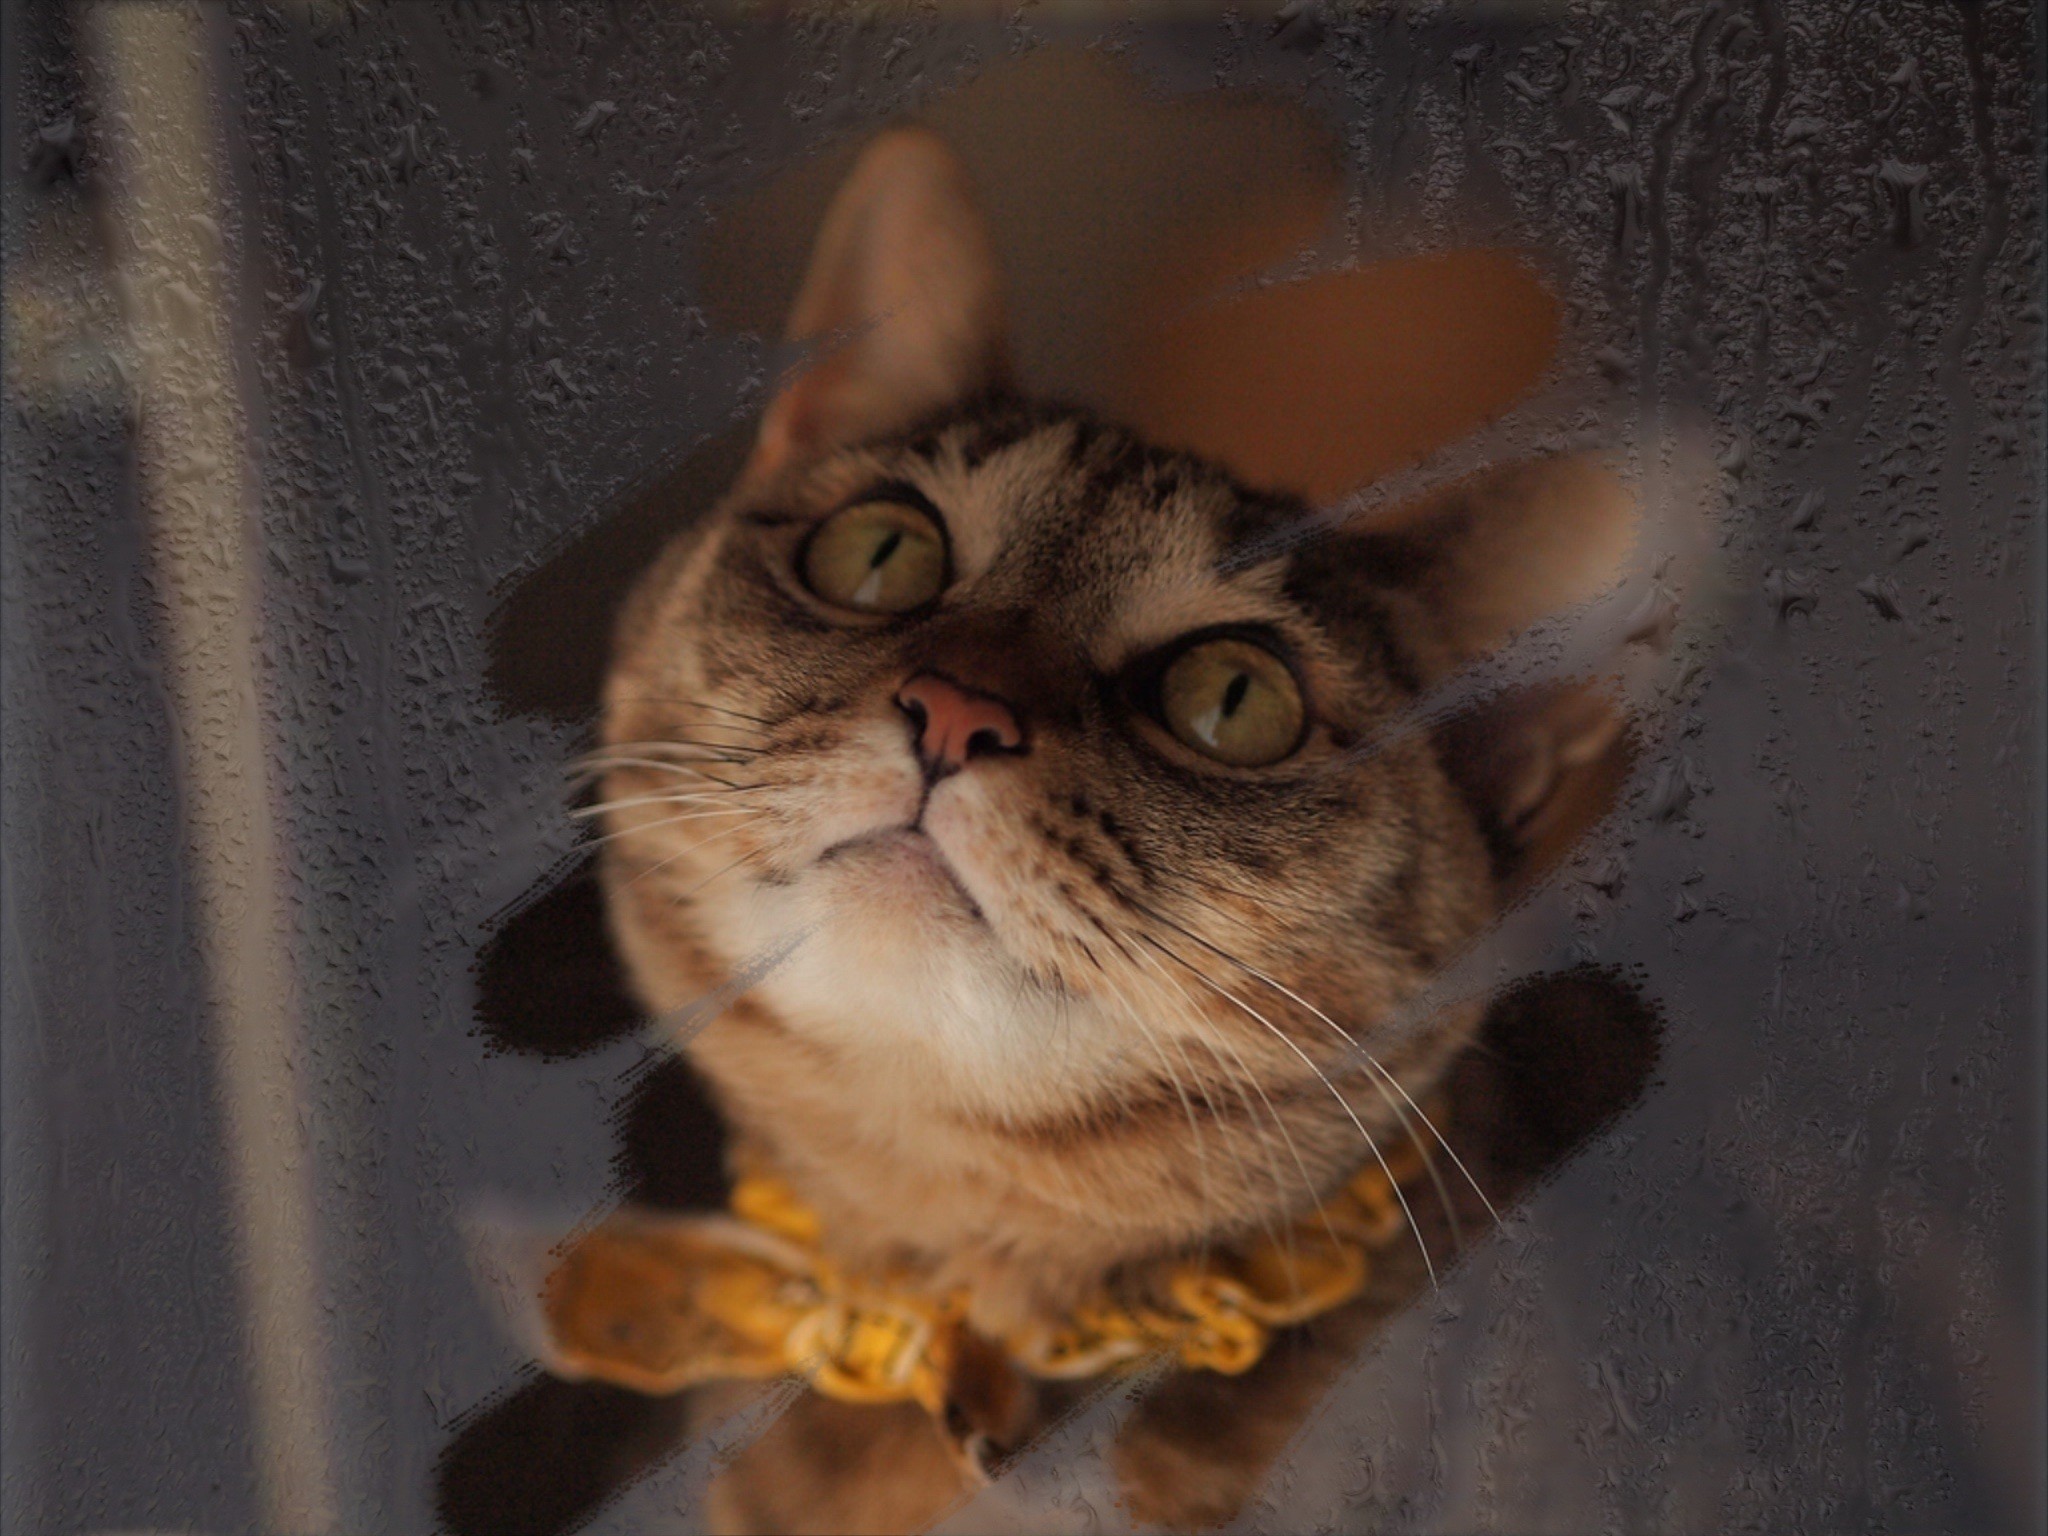 General 2048x1536 yellow eyes cats condensation window indoors feline mammals animals animal eyes